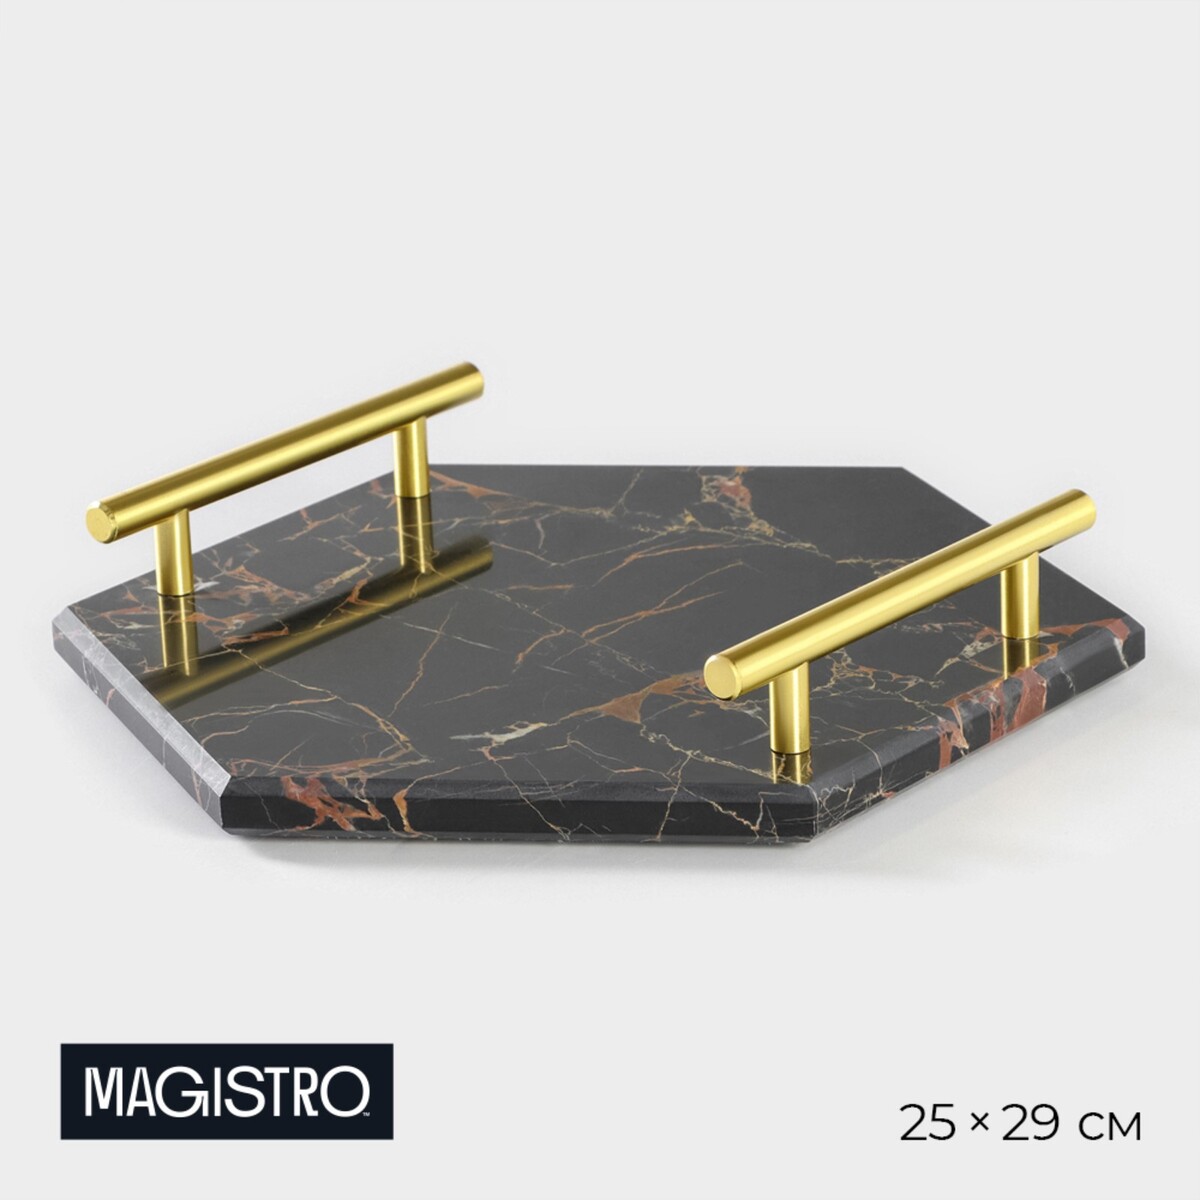 Поднос из мрамора magistro marble, 25×29 см, цвет черный